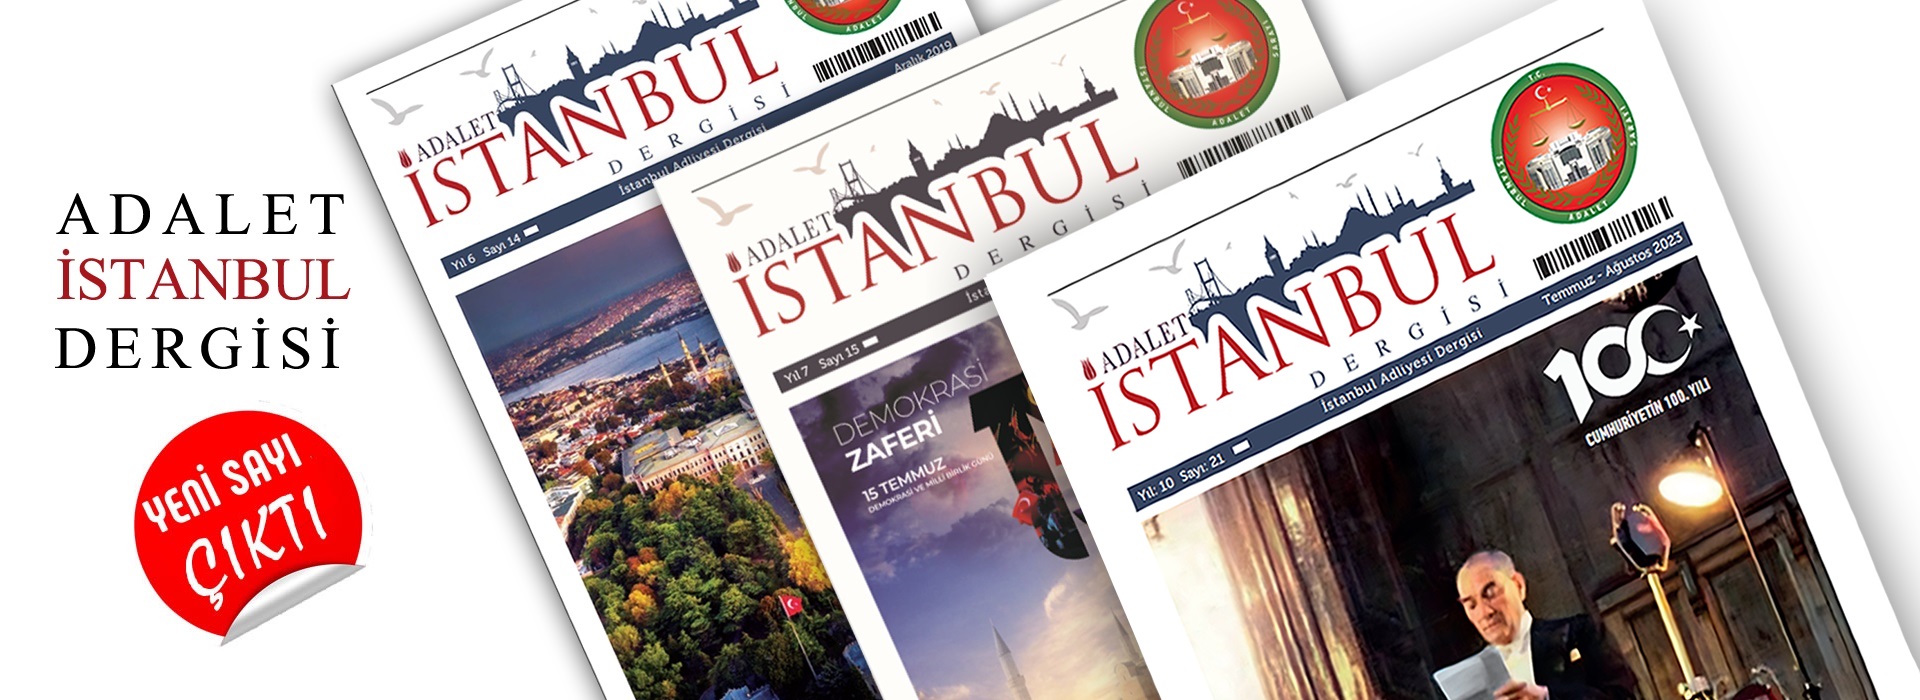 Adalet İstanbul Dergisi